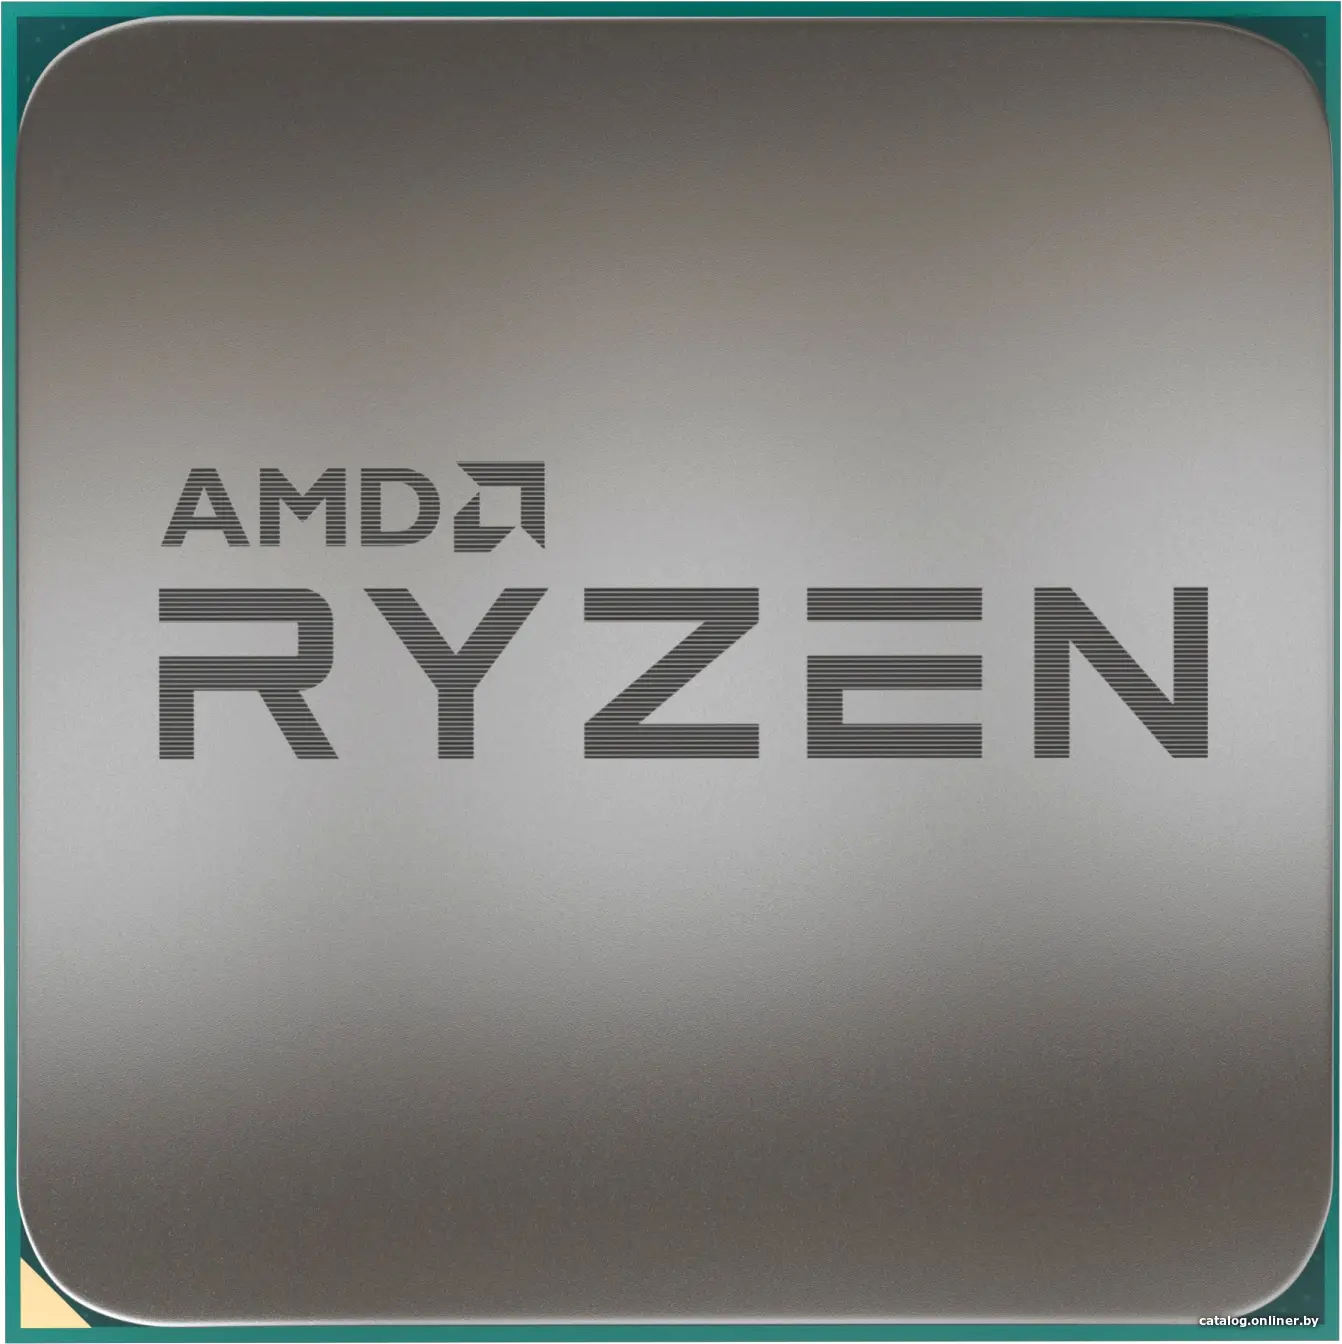 Купить AMD CPU Desktop Ryzen 5 6C/12T 3600 (4.2GHz,36MB,65W,AM4)  tray, цена, опт и розница